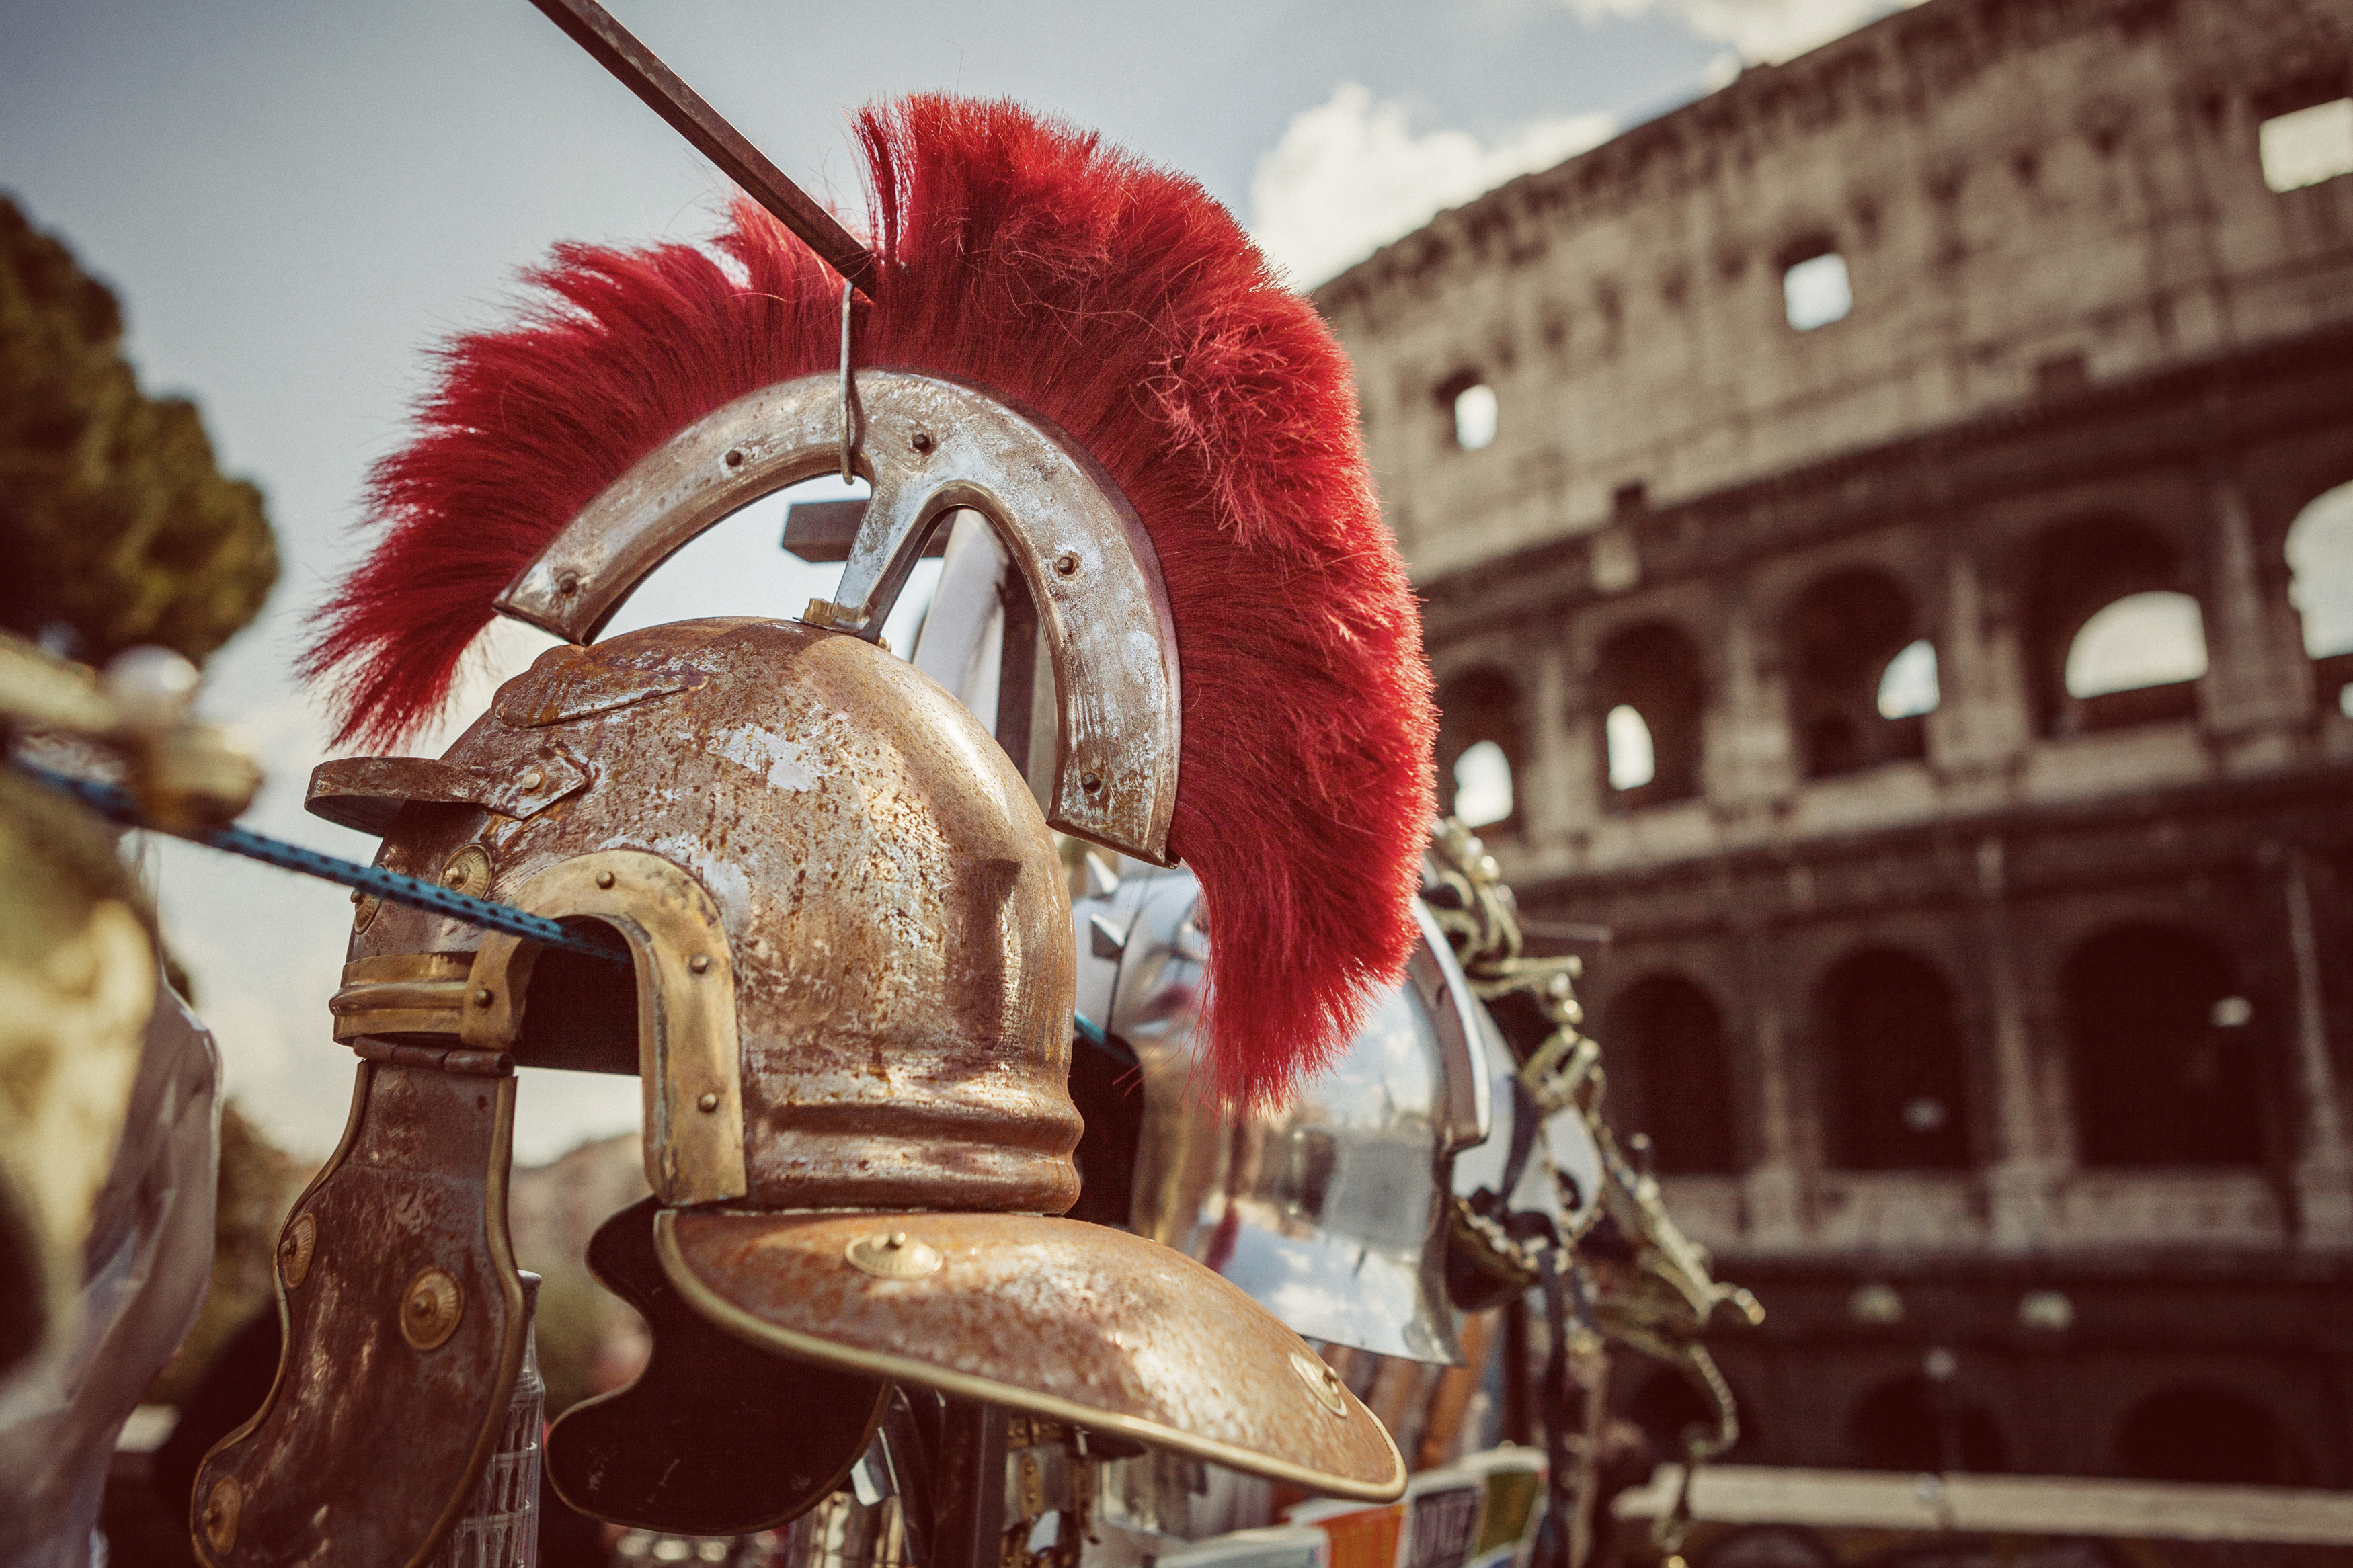 gladiator helmets